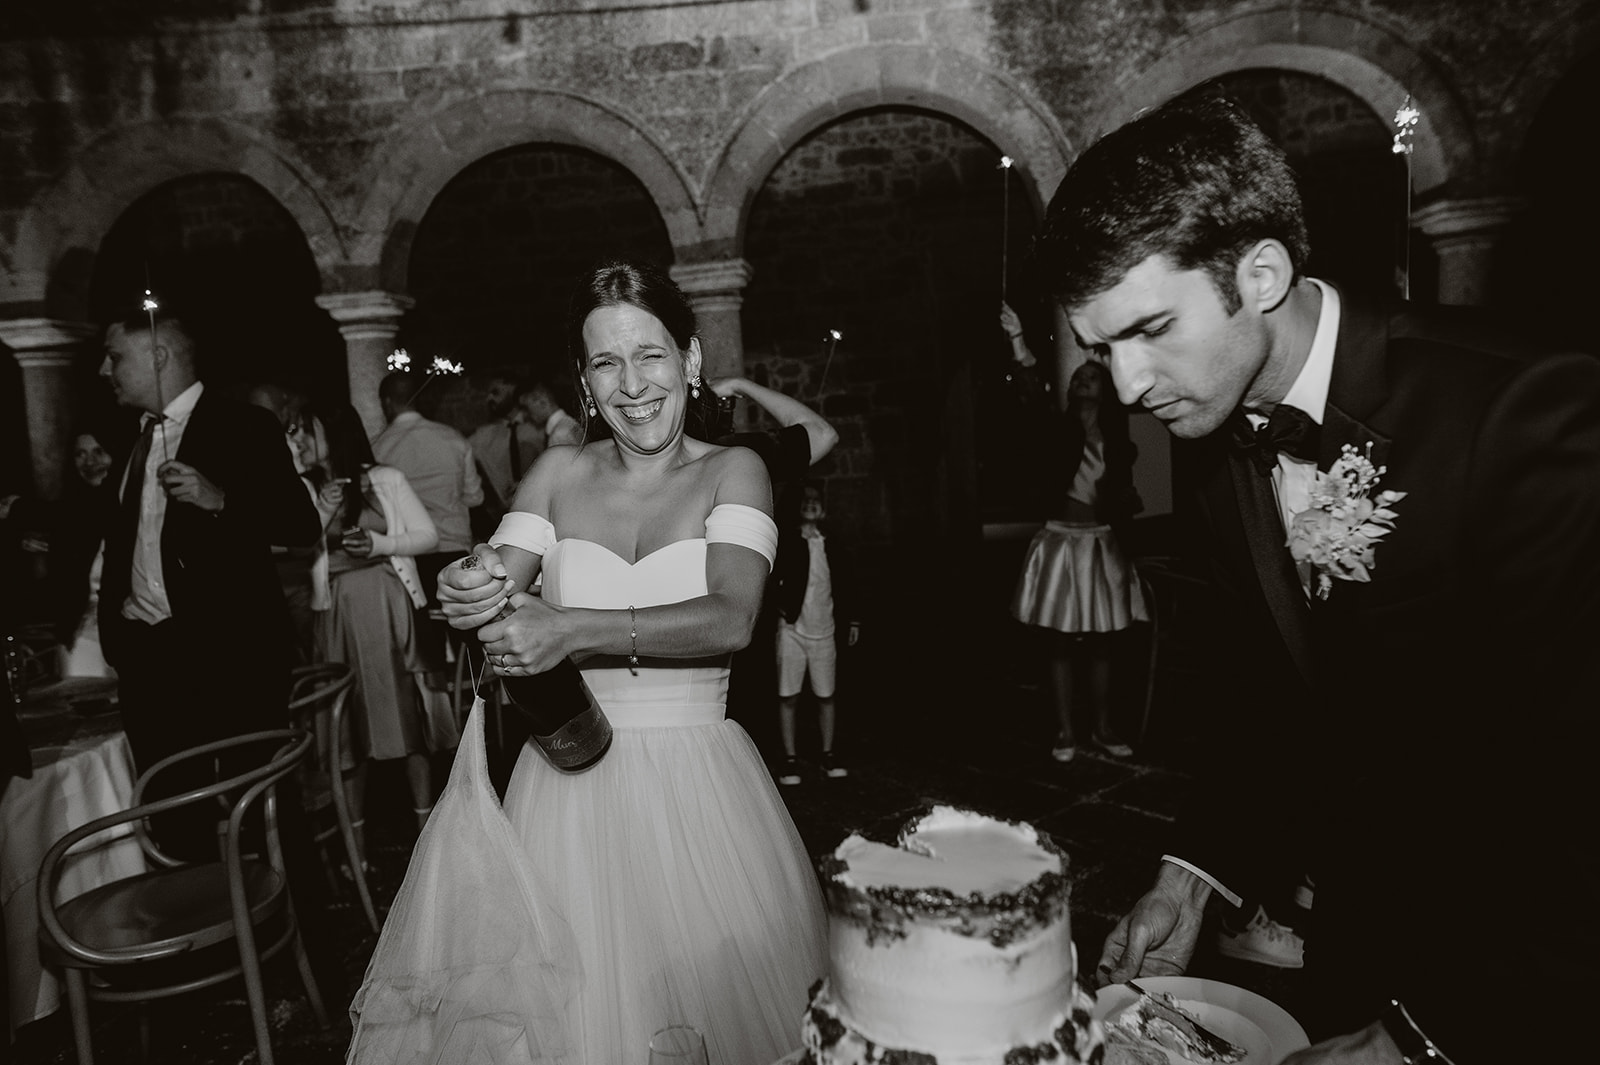 A couple who got married in a Souto Moura venue near Porto, Portugal, Europe.